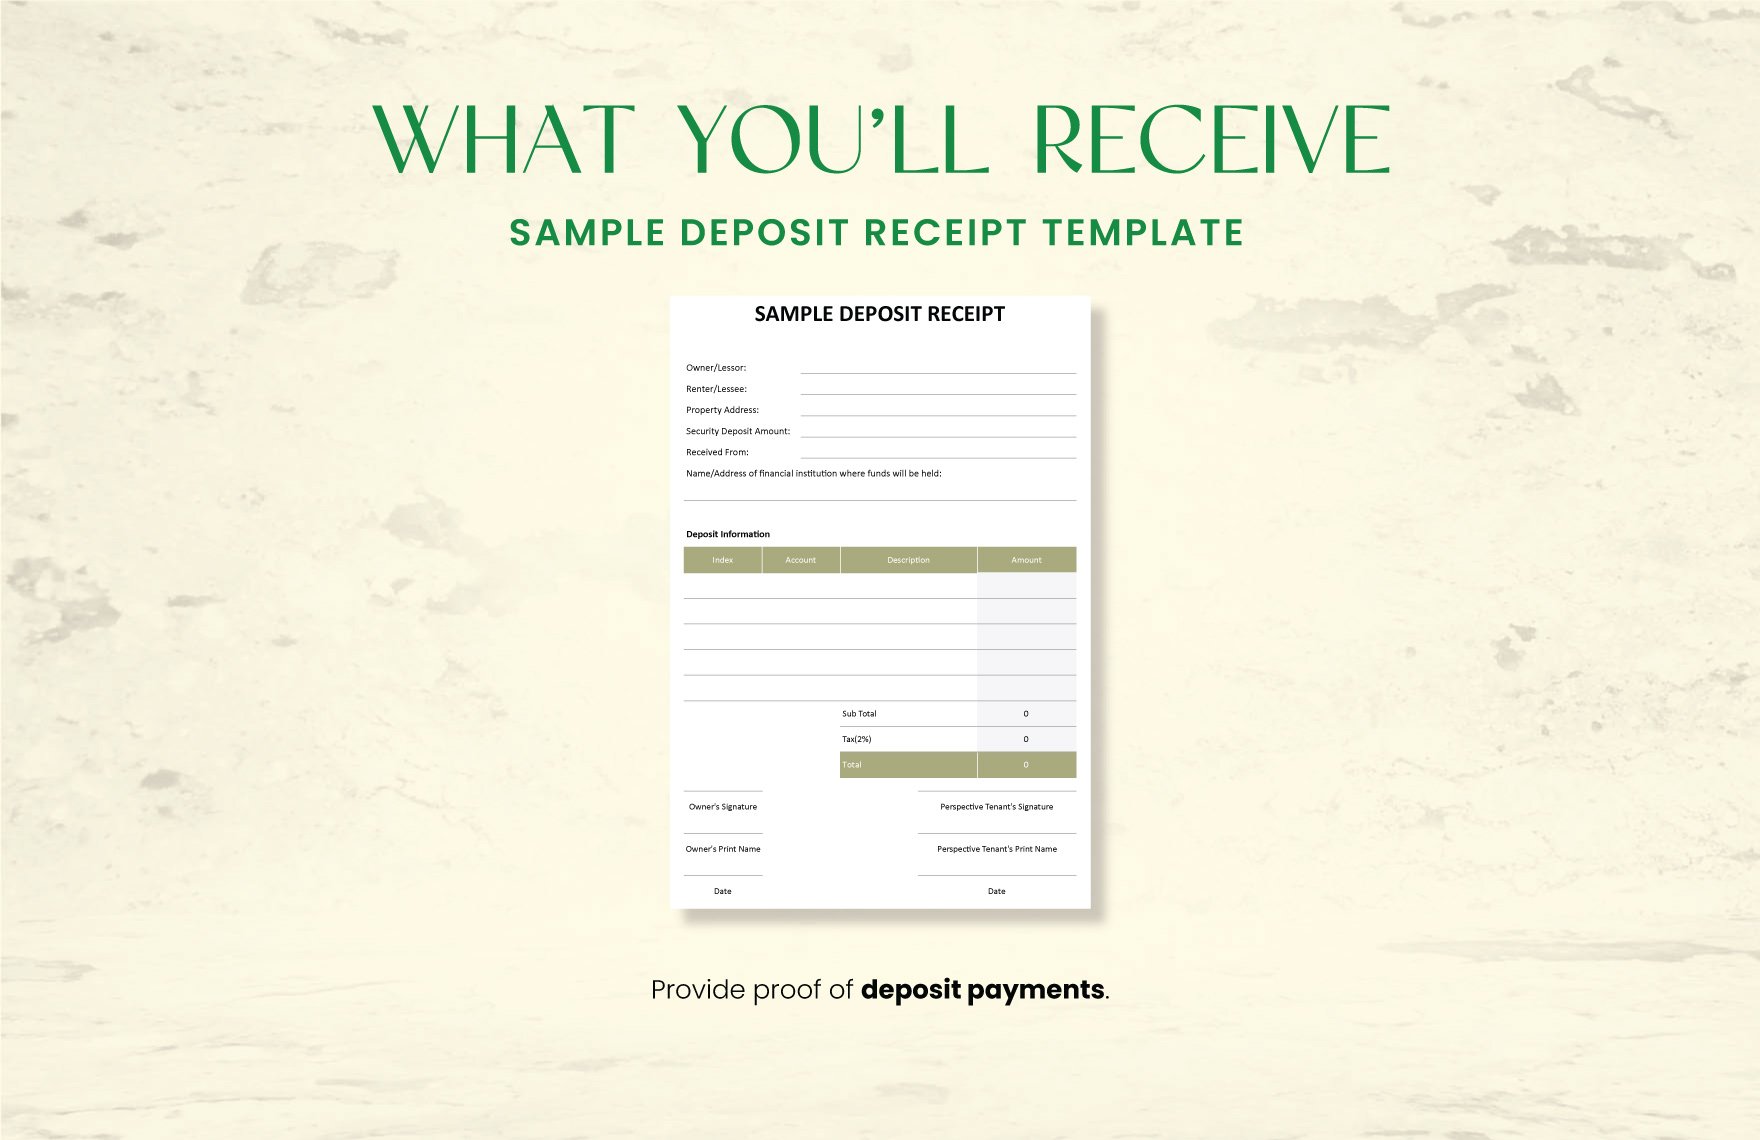 Sample Deposit Receipt Template